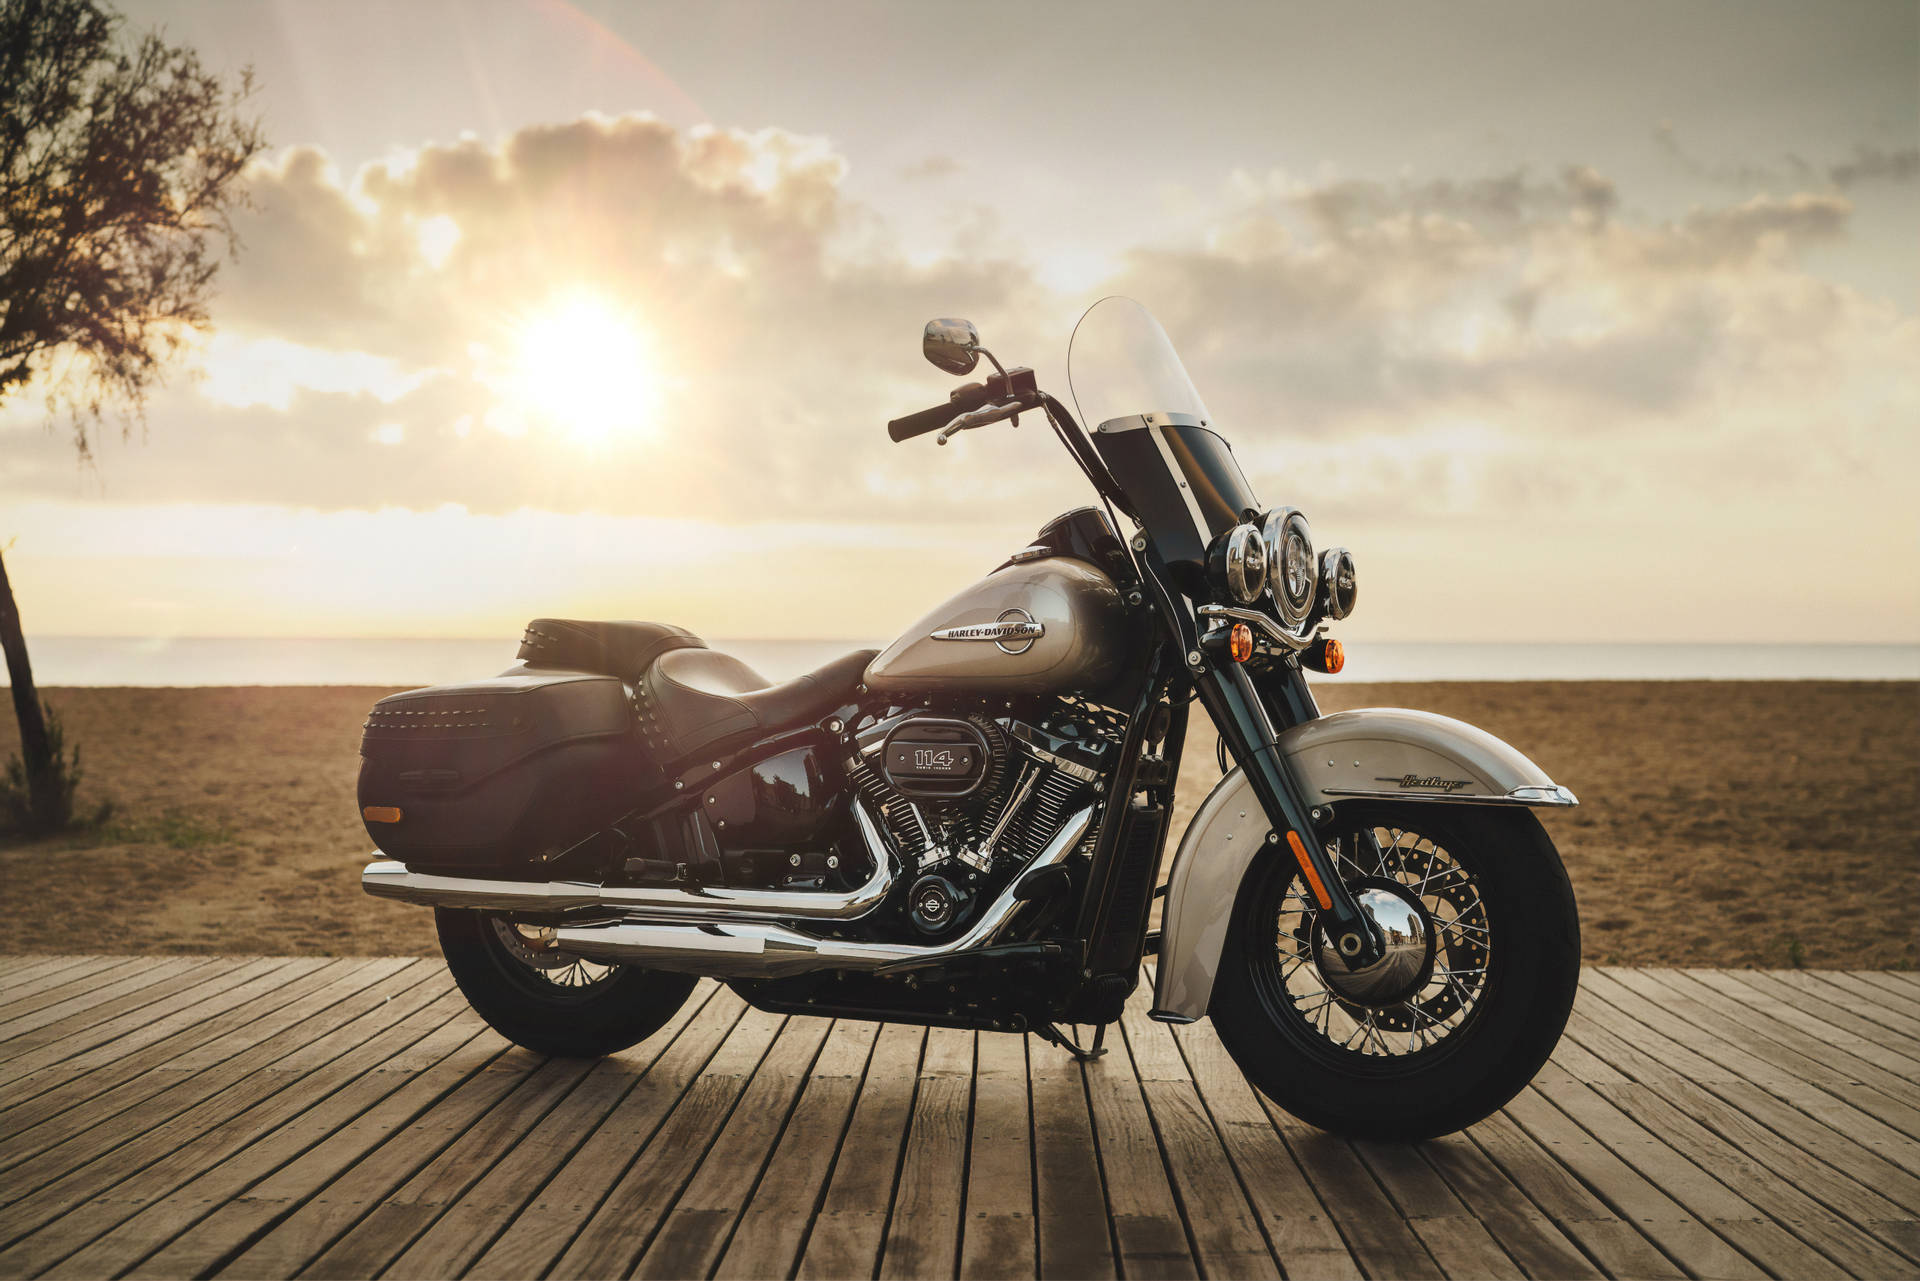 Harley Davidson During Sunset Background